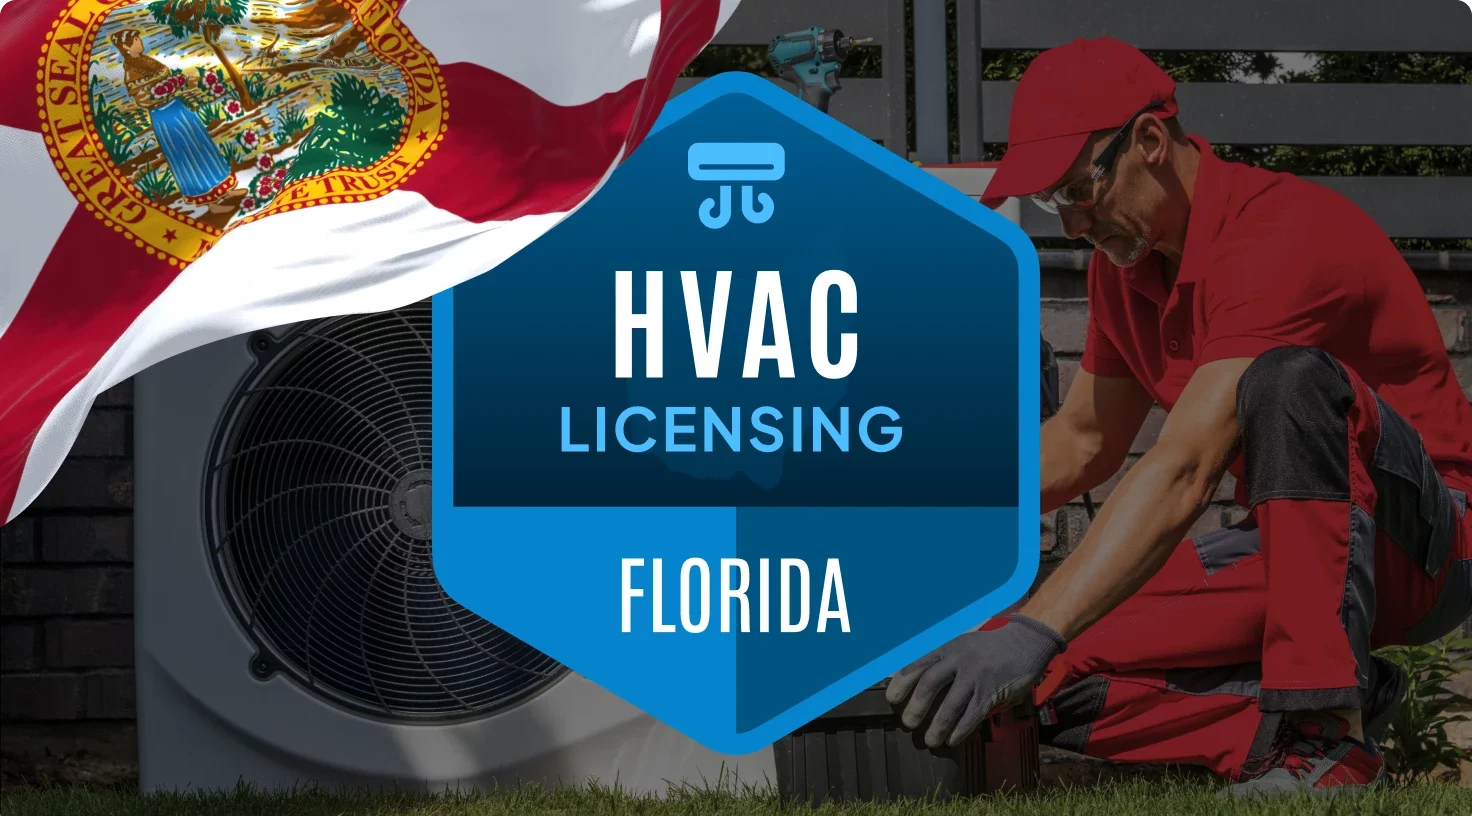 Hvac Florida License Aspect Ratio 1472 816 Aspect Ratio 1472 816